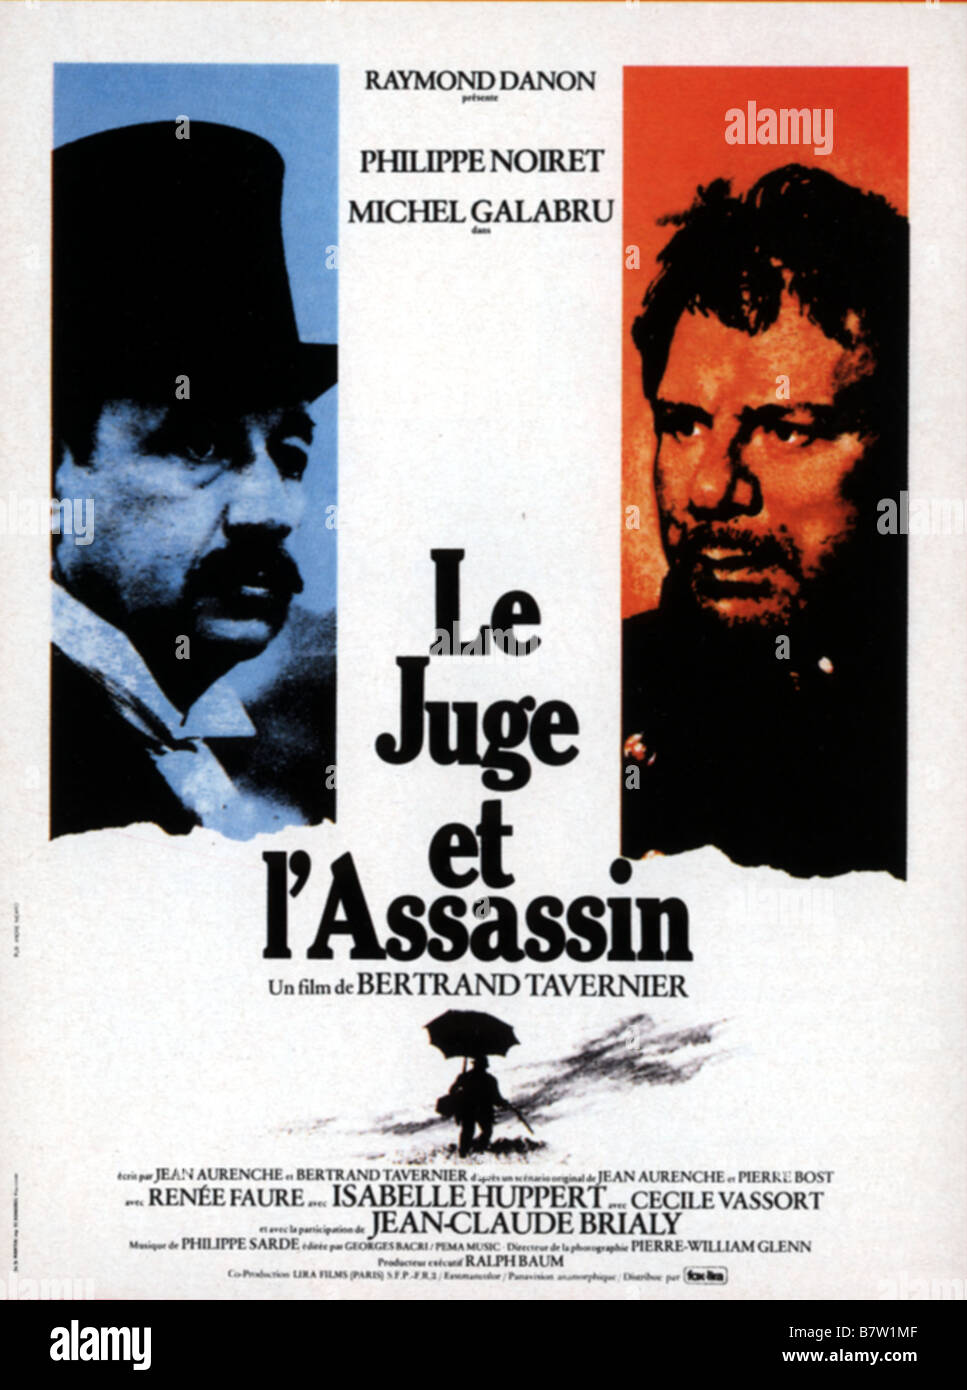 Le Juge et l'assassin Year: 1976 - France Michel Galabru Philippe Noiret   Director : Bertrand Tavernier Movie poster (Fr) Stock Photo